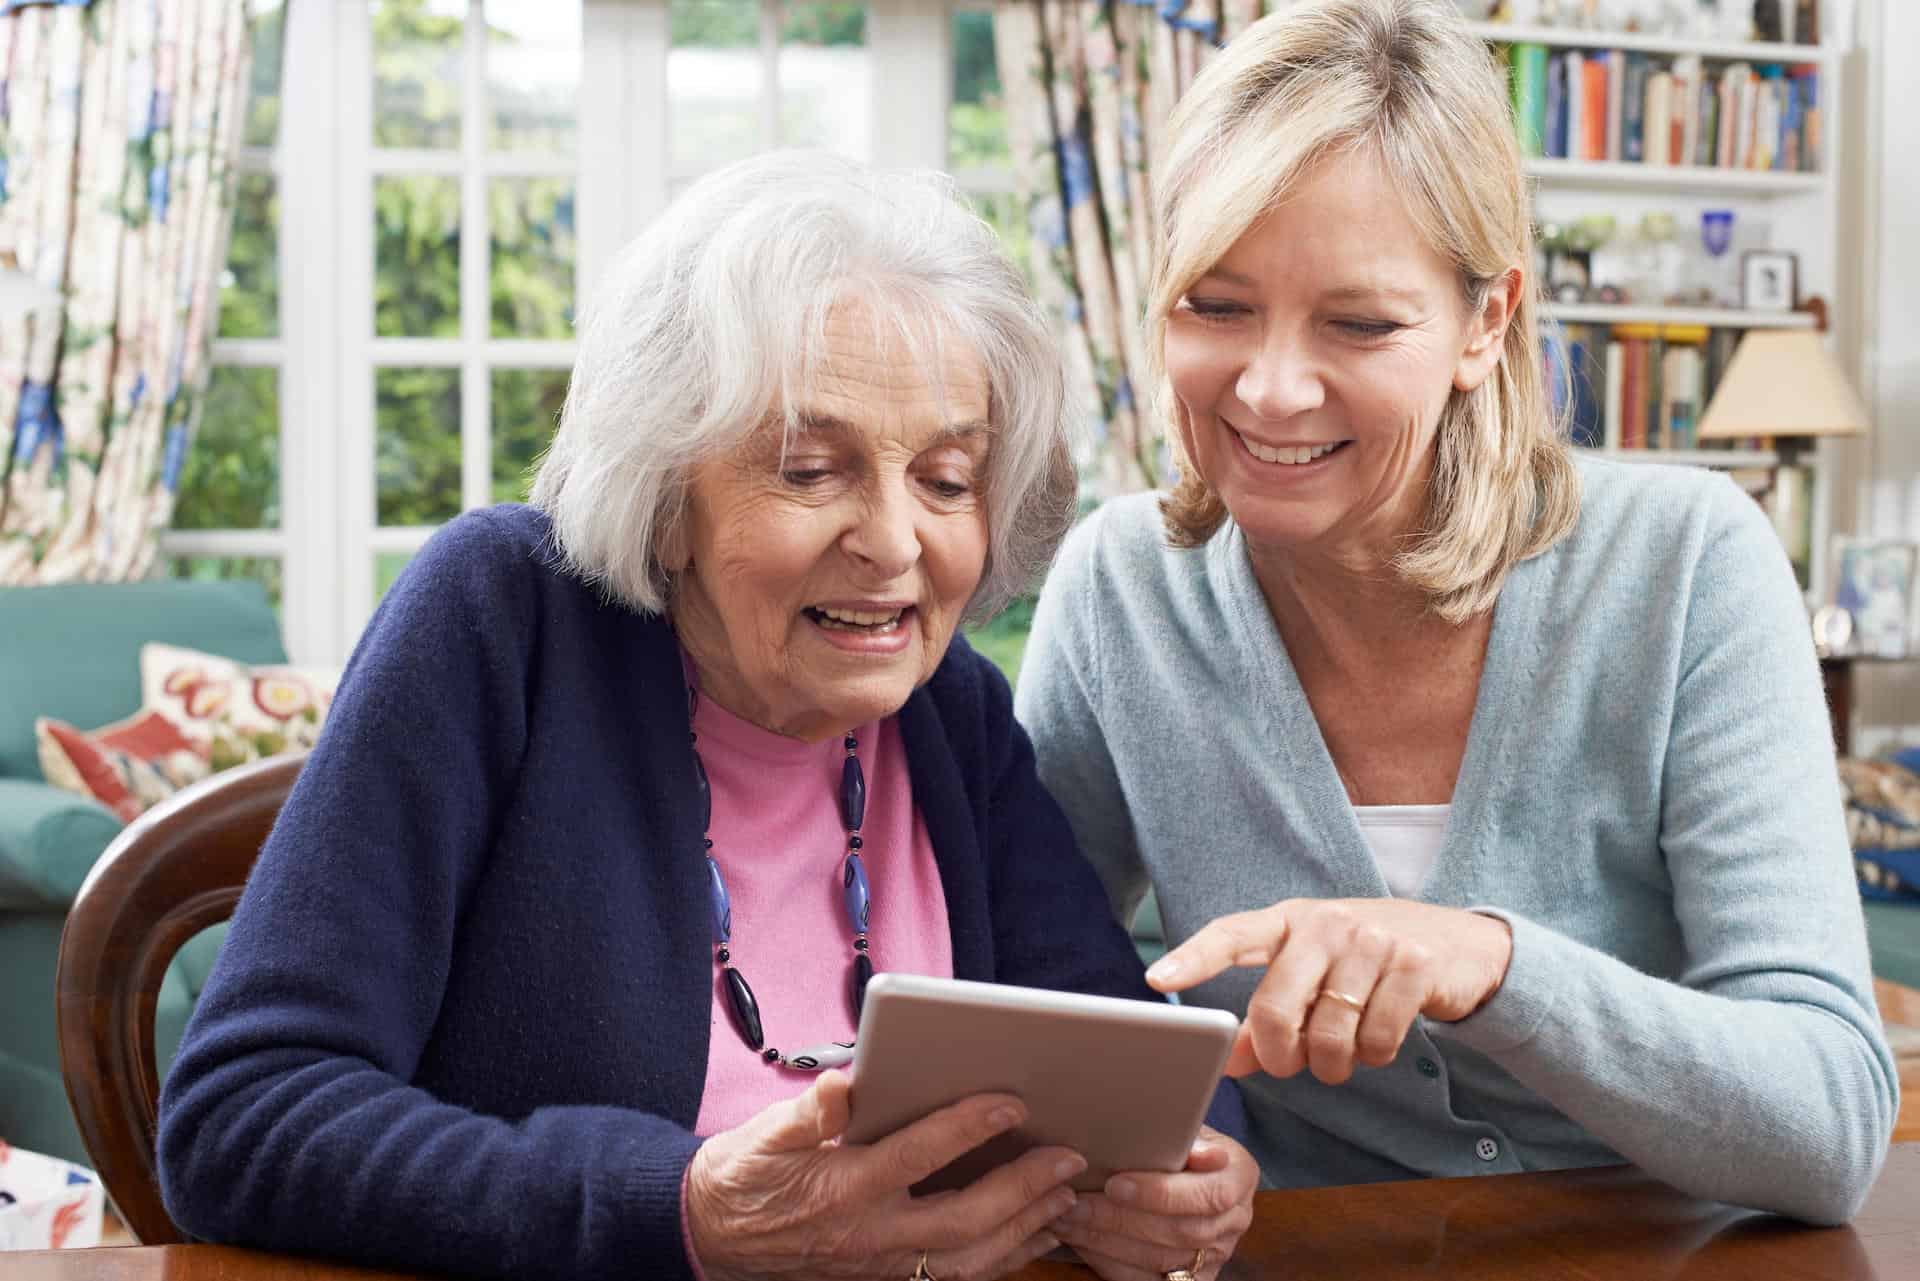 Technology Impacts Senior Care